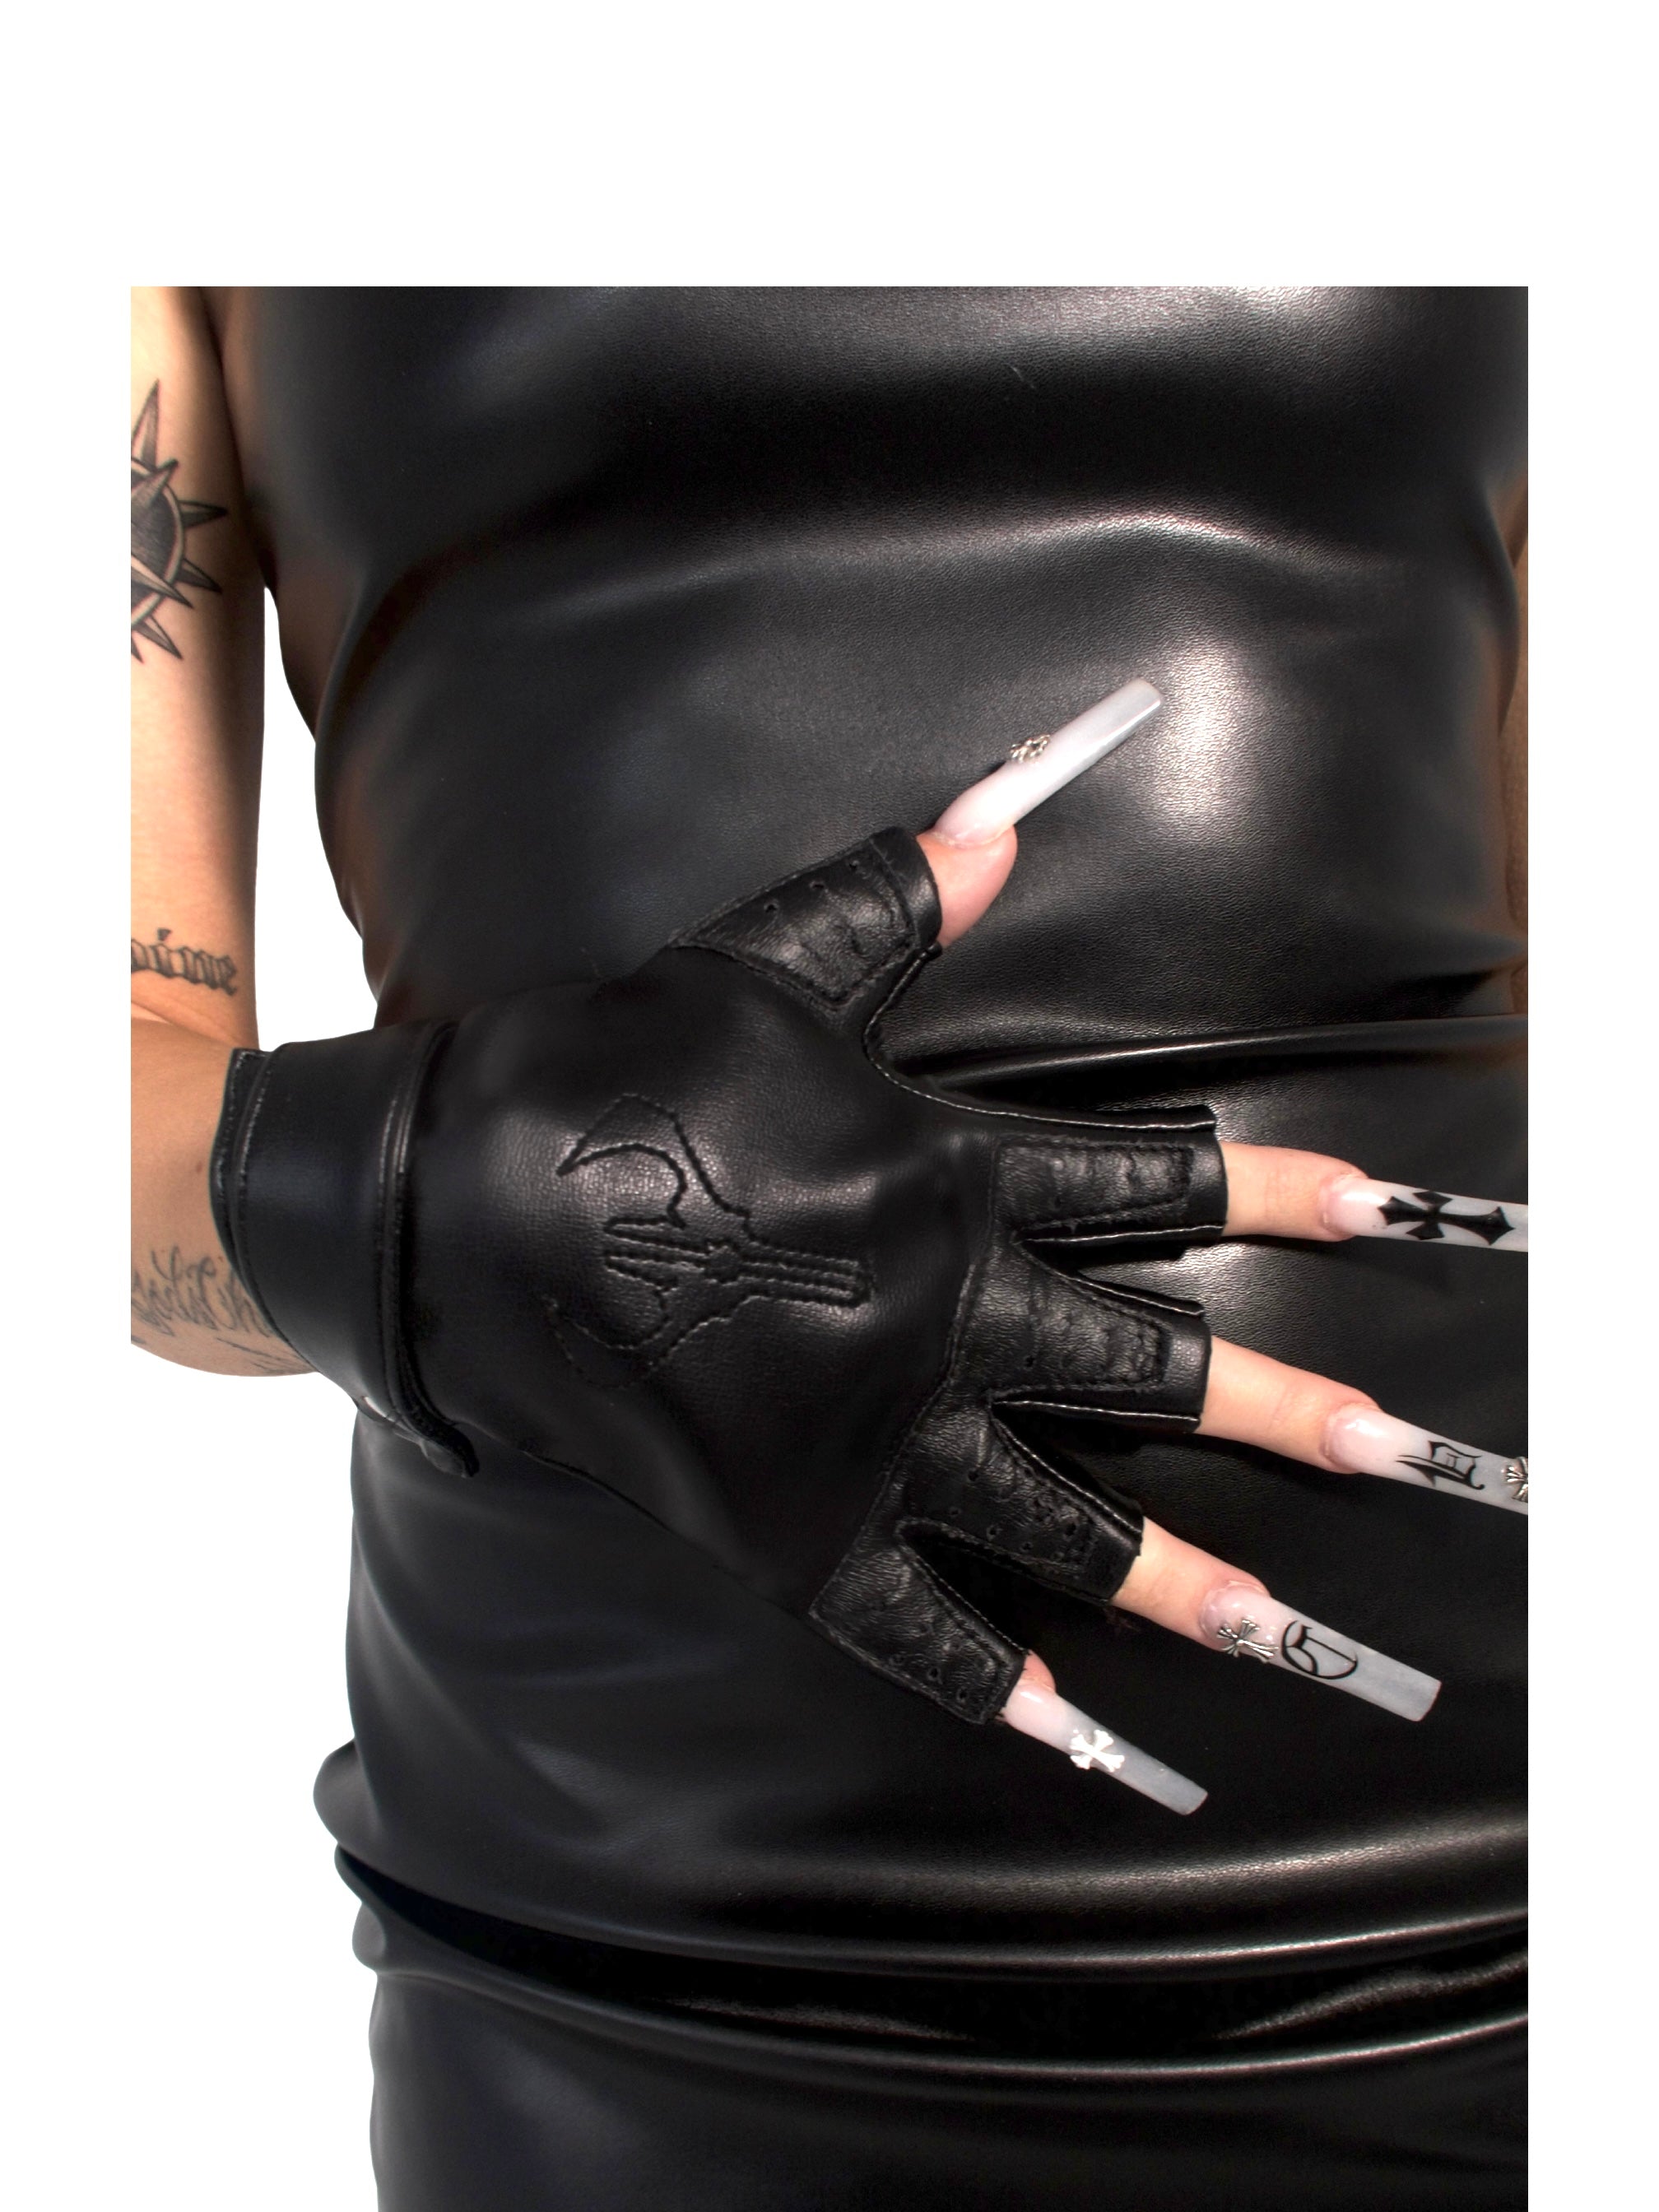 Elysian gloves  Fingerless leather gloves, Leather gloves, Leather